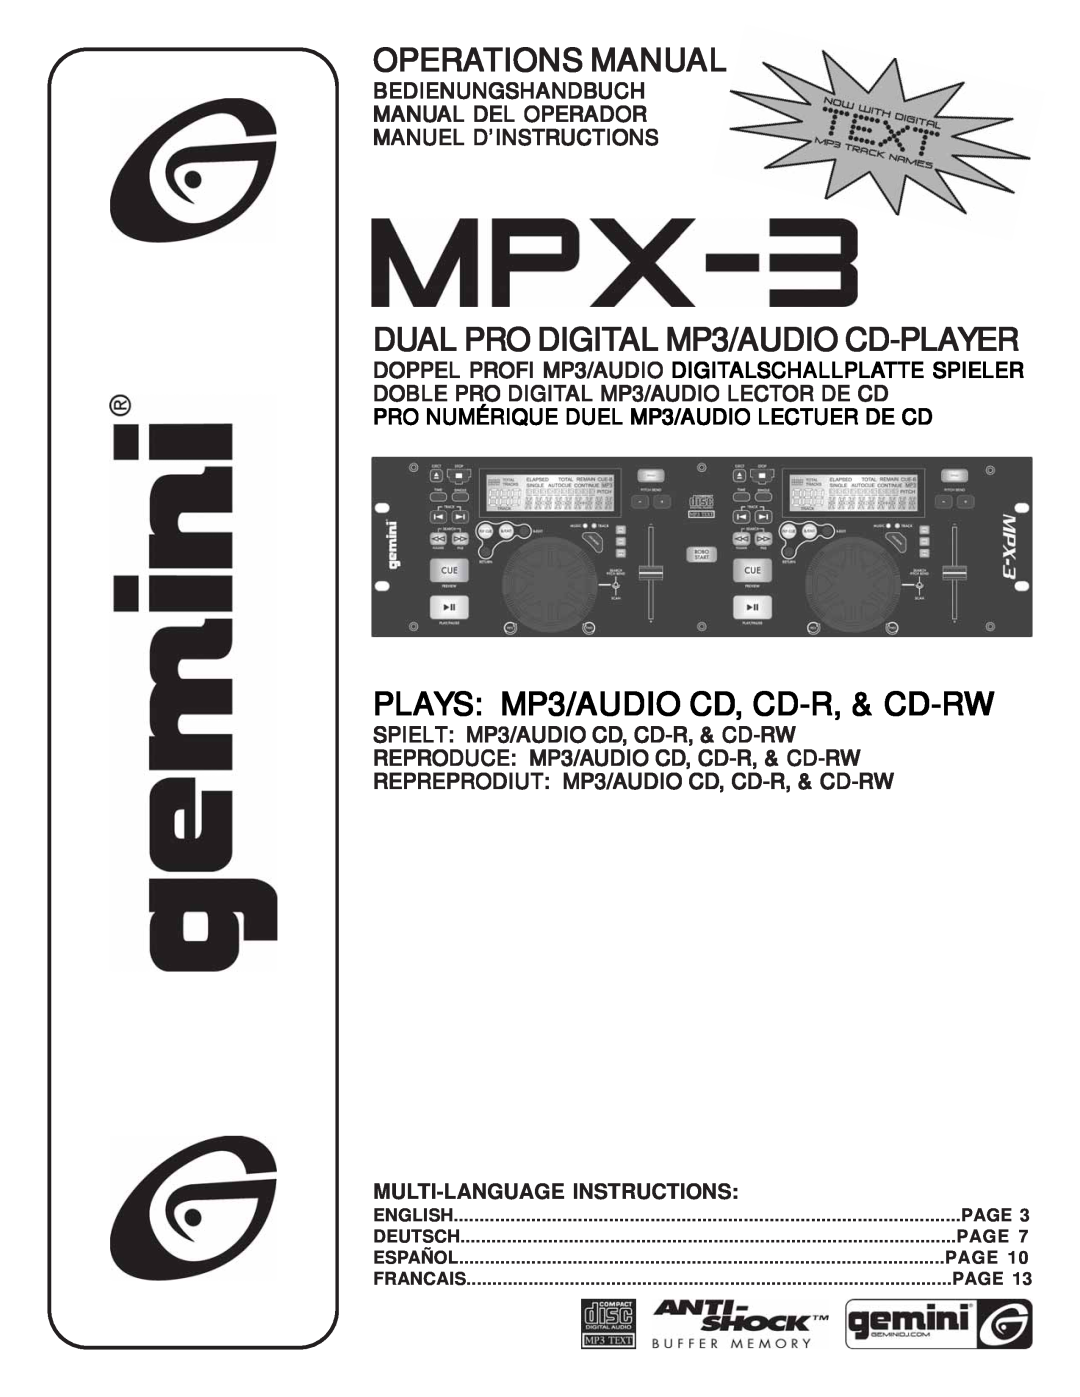 Gemini MPX-3 manual Operations Manual, PLAYS MP3/AUDIO CD, CD-R,& CD-RW, DUAL PRO DIGITAL MP3/AUDIO CD-PLAYER, English 